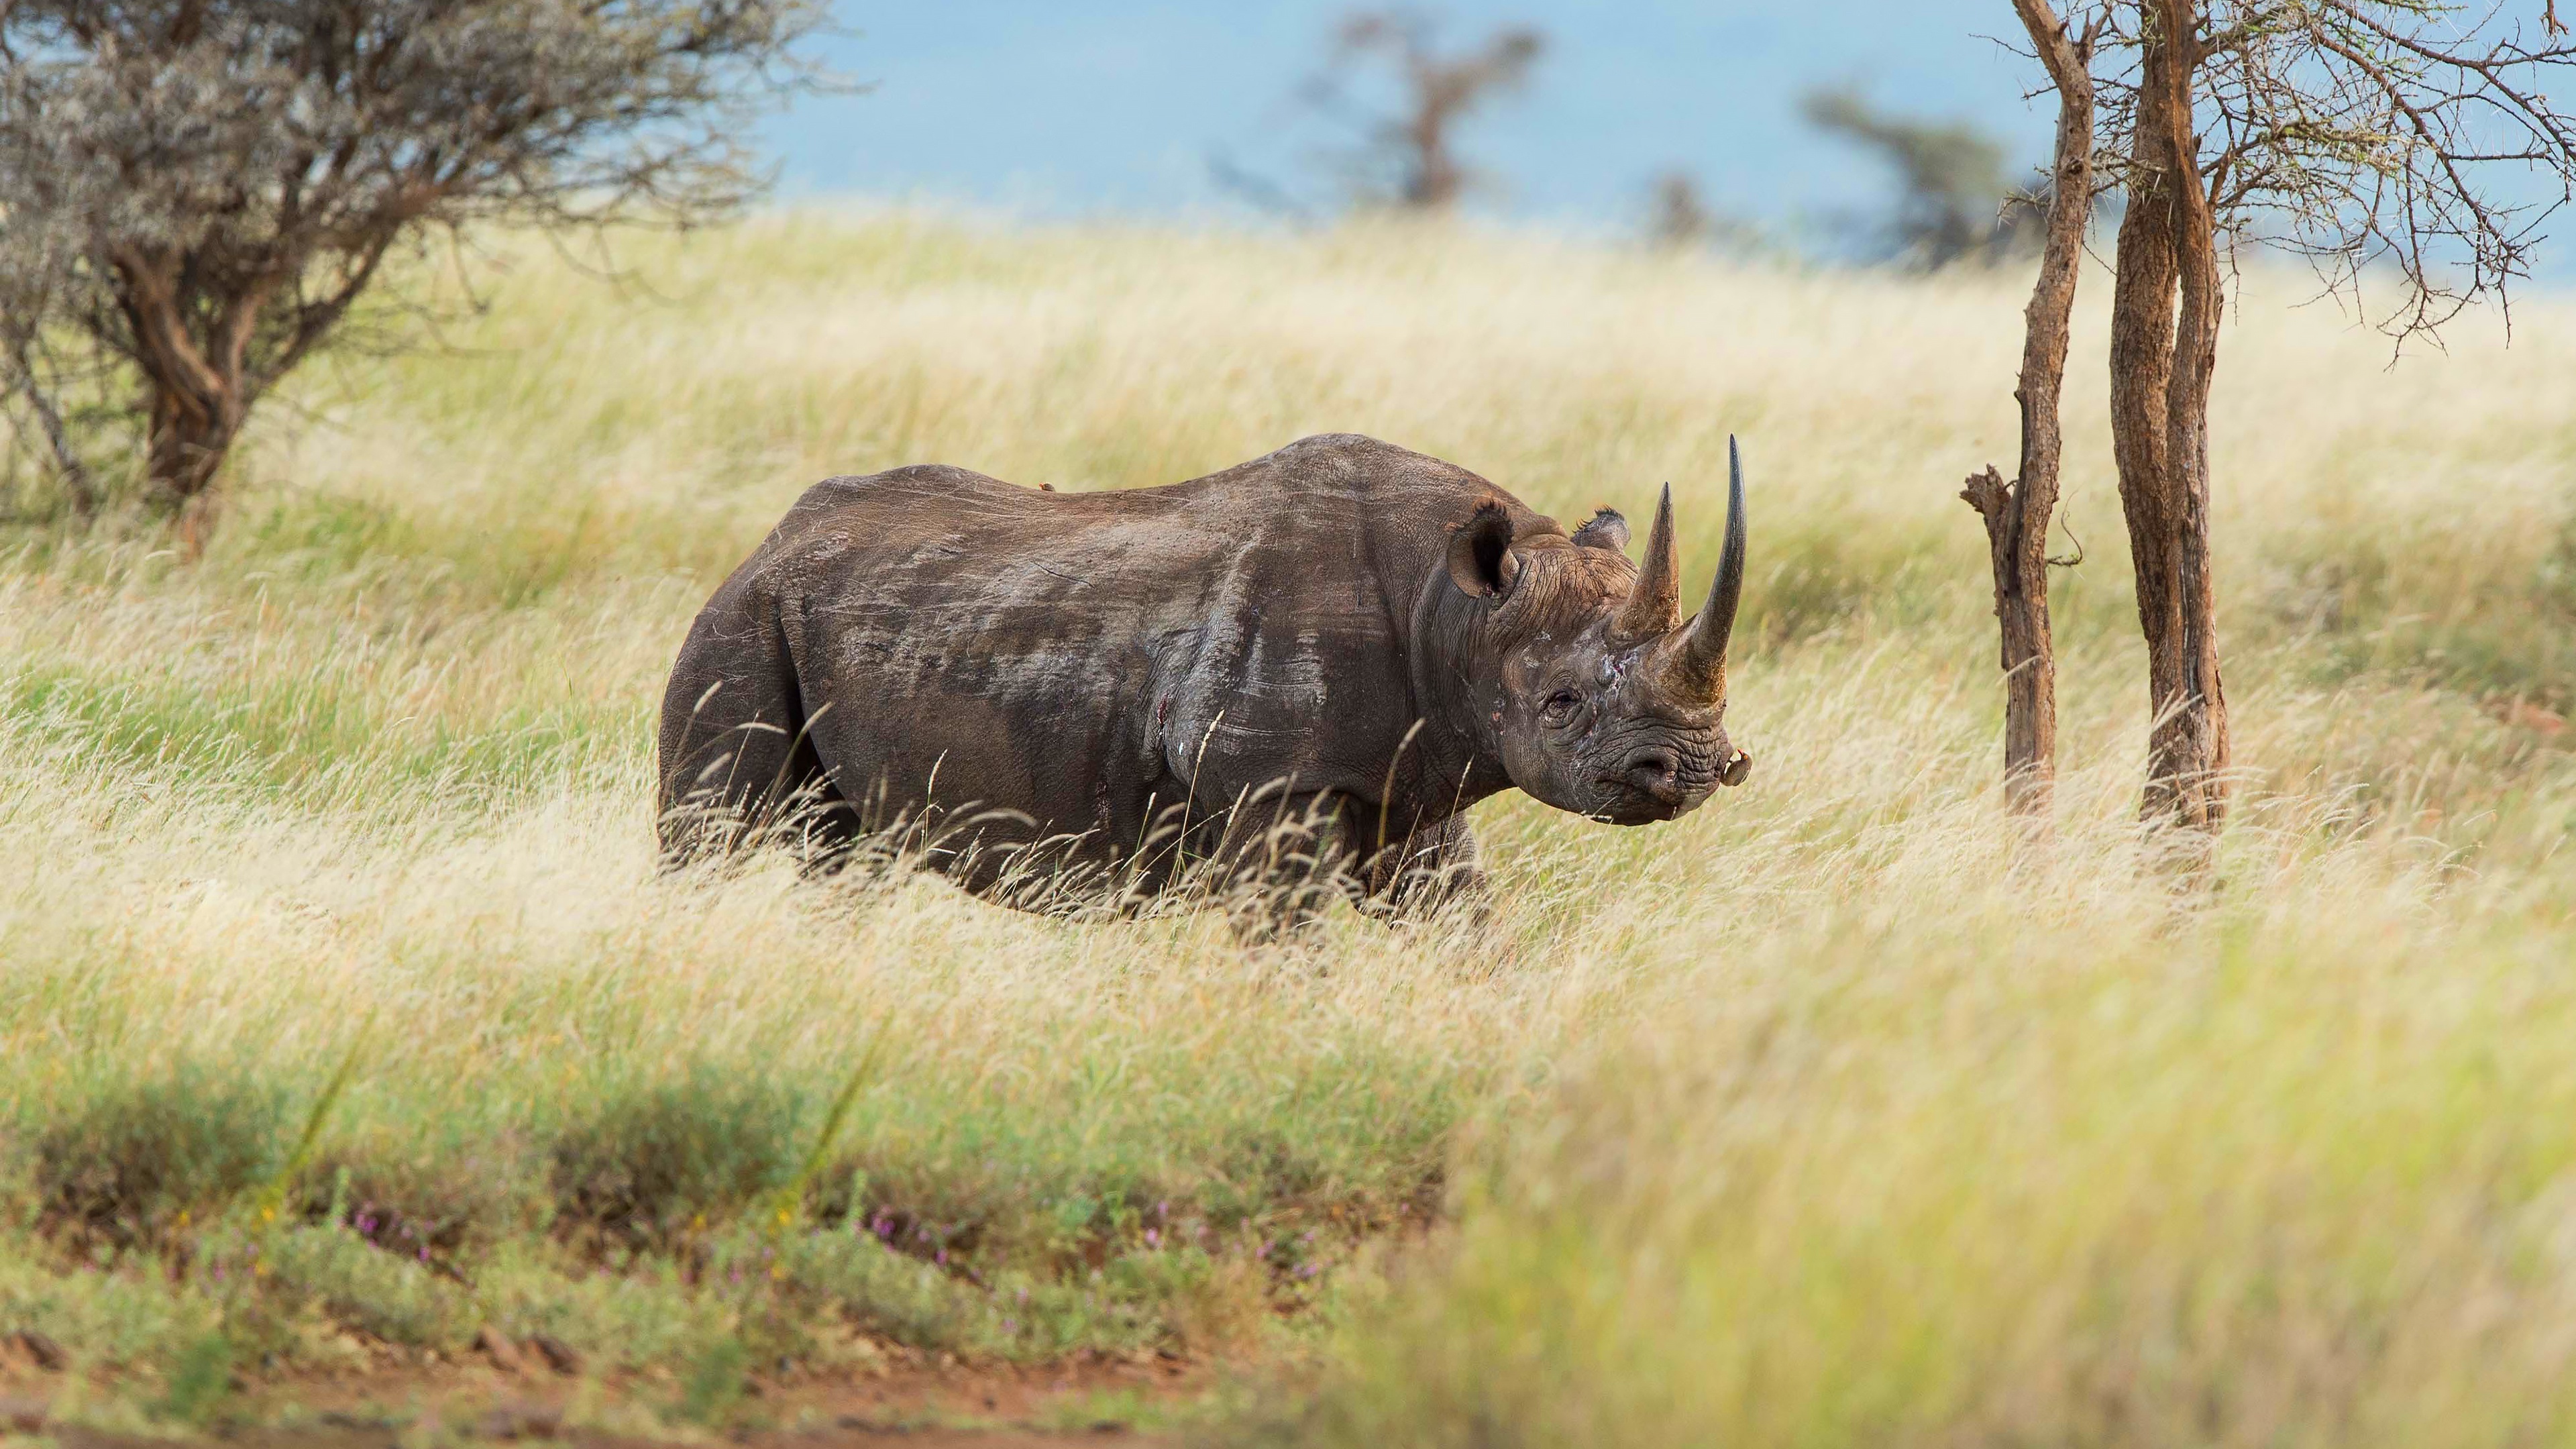 Grass and rhino wallpaper, Rhino in African landscape, Scenic nature backdrop, Rhino amidst vegetation, 3840x2160 4K Desktop